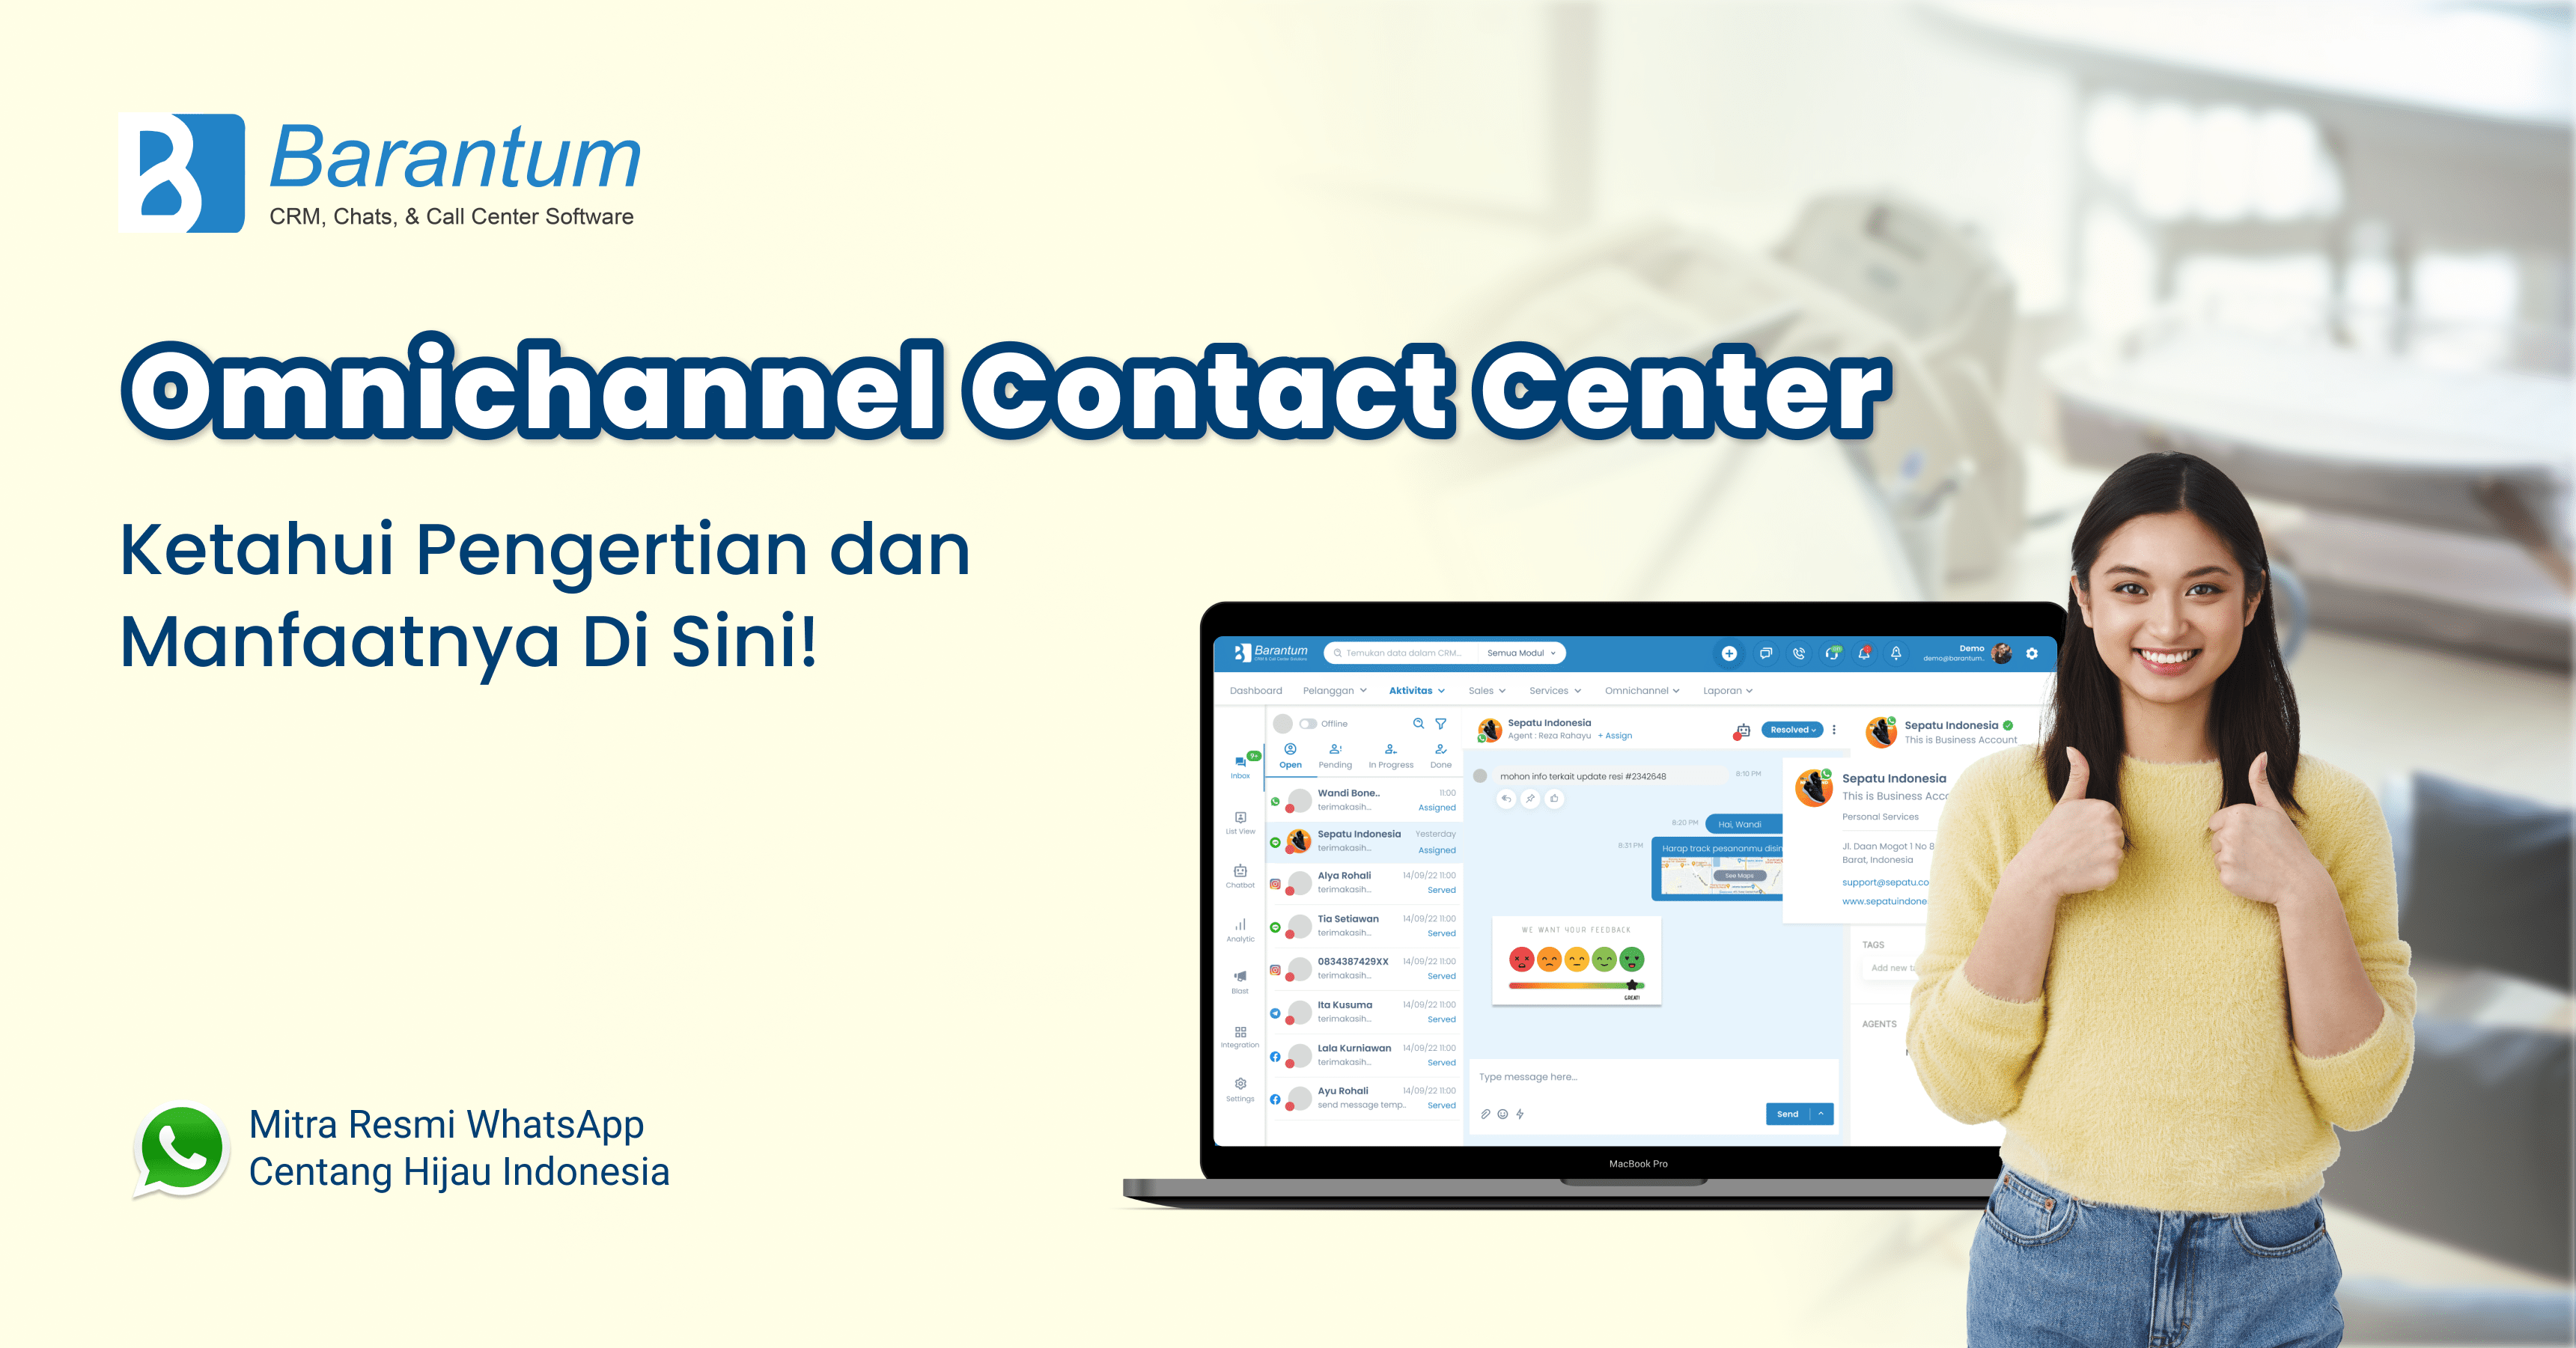 omnichannel contact center